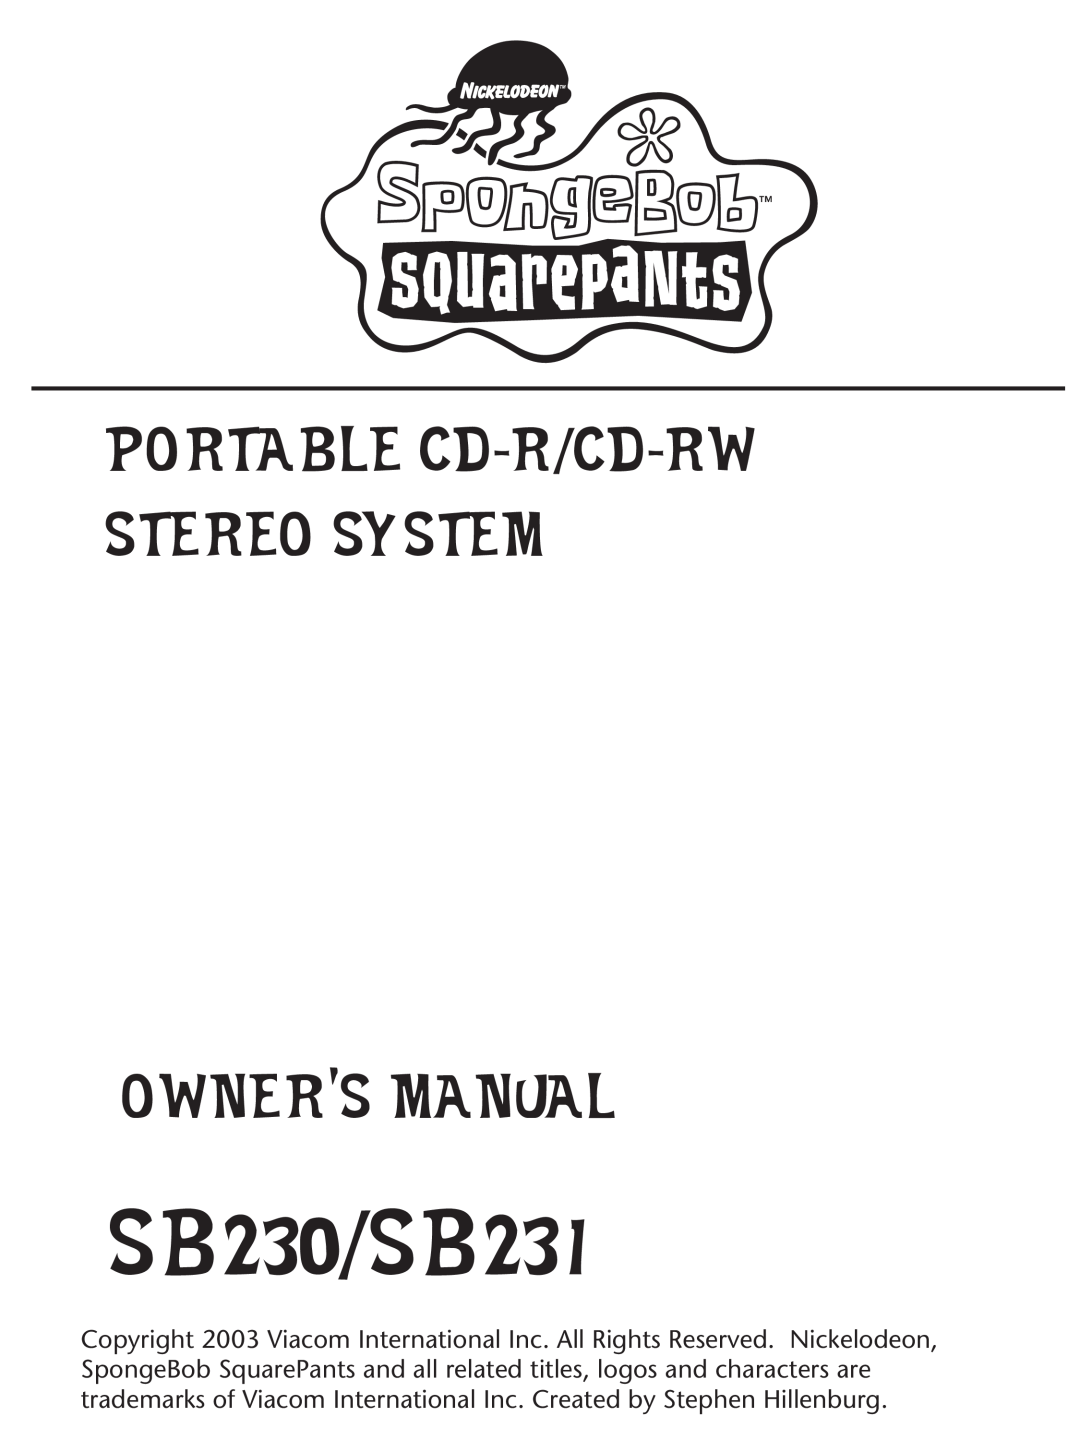 Emerson owner manual SB230/SB231 